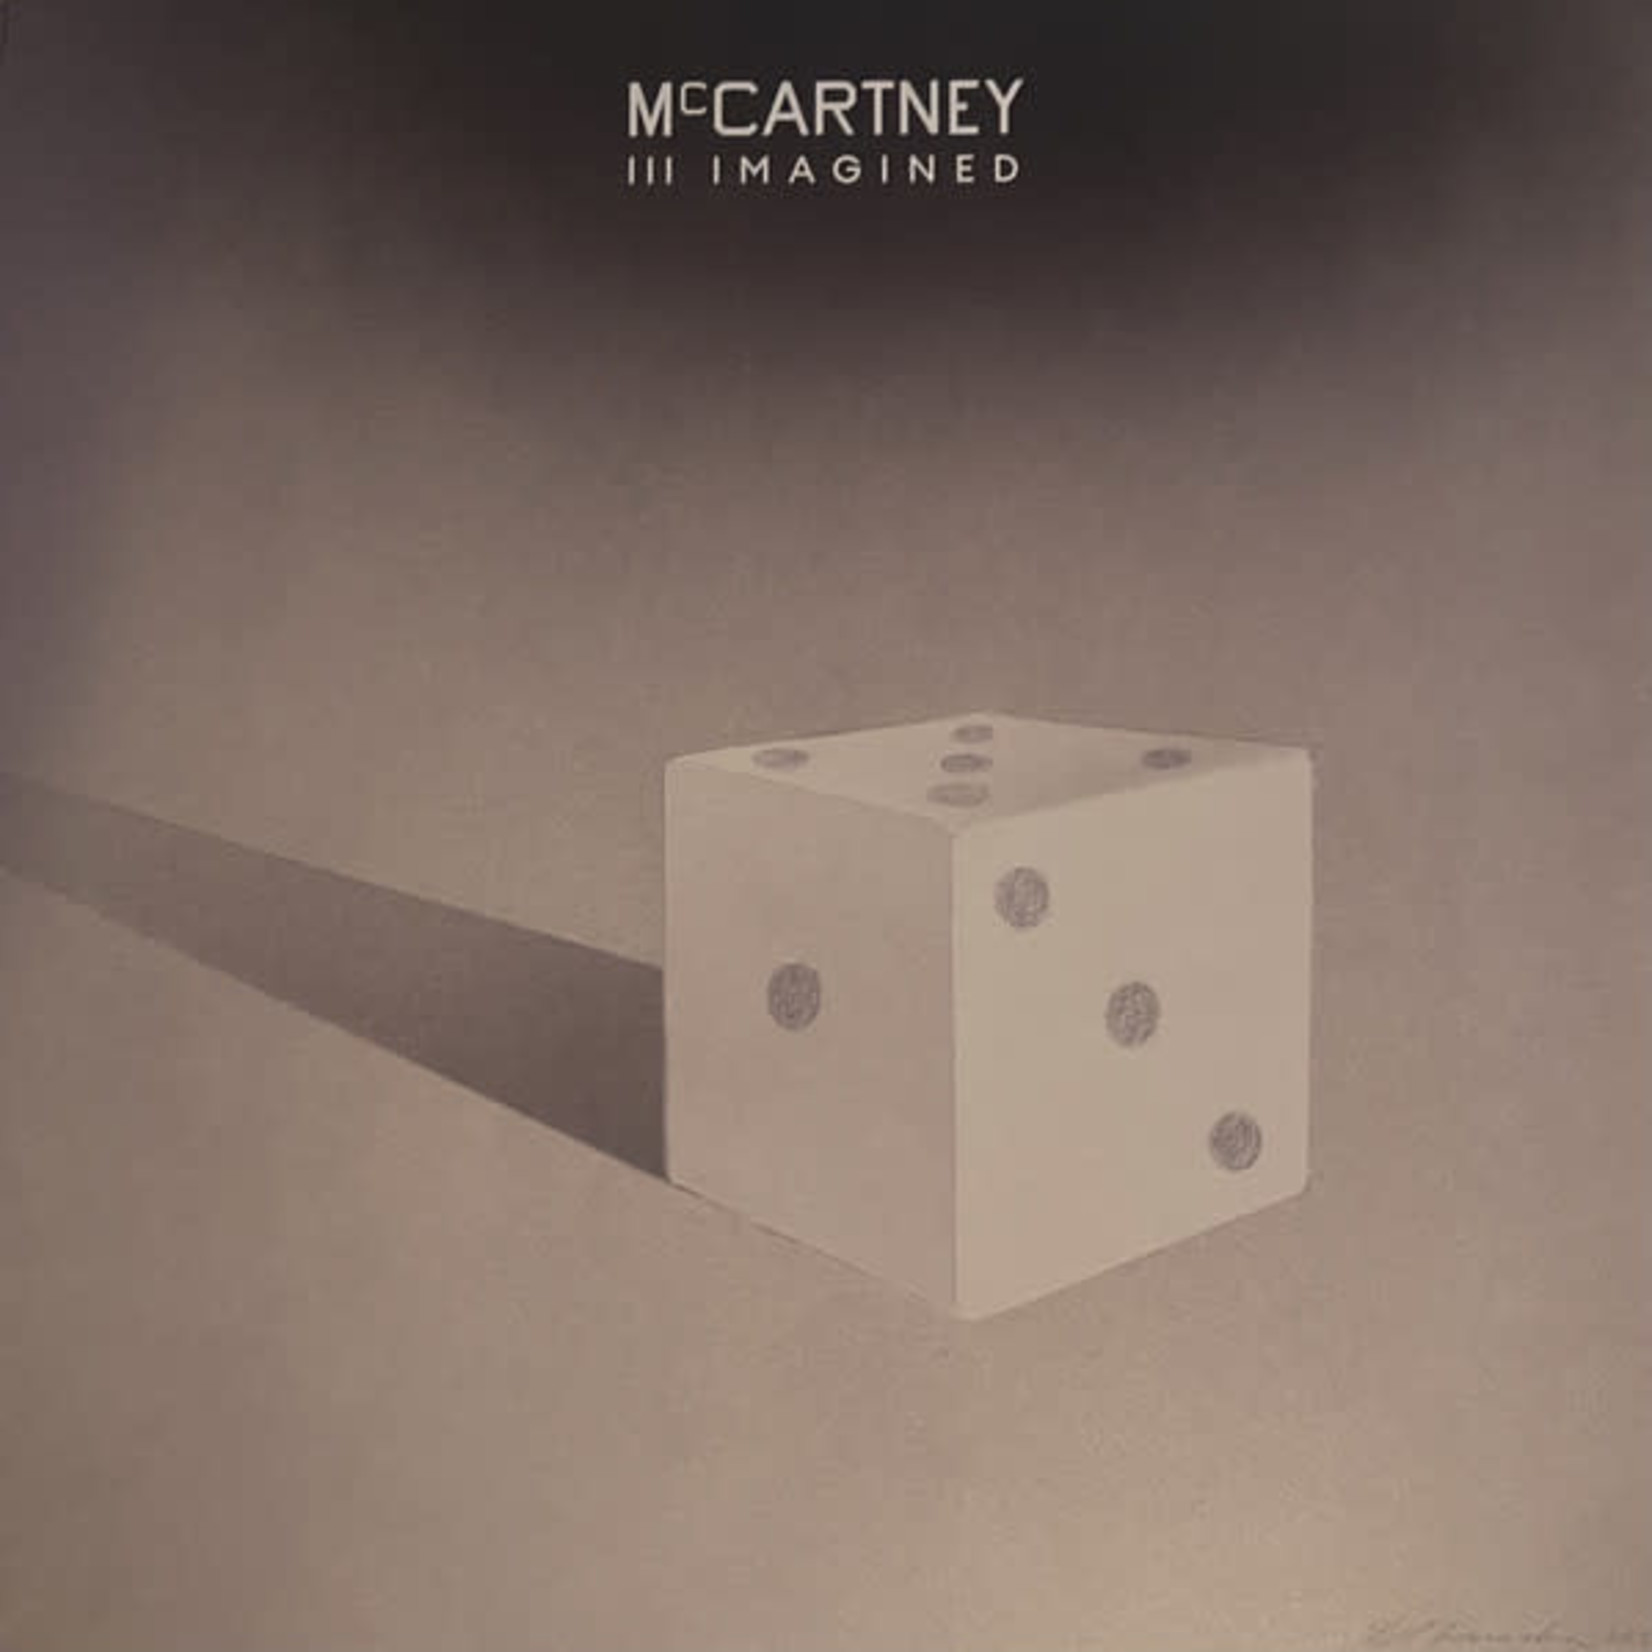 [New] Paul Mccartney - McCartney III Imagined (2LP)